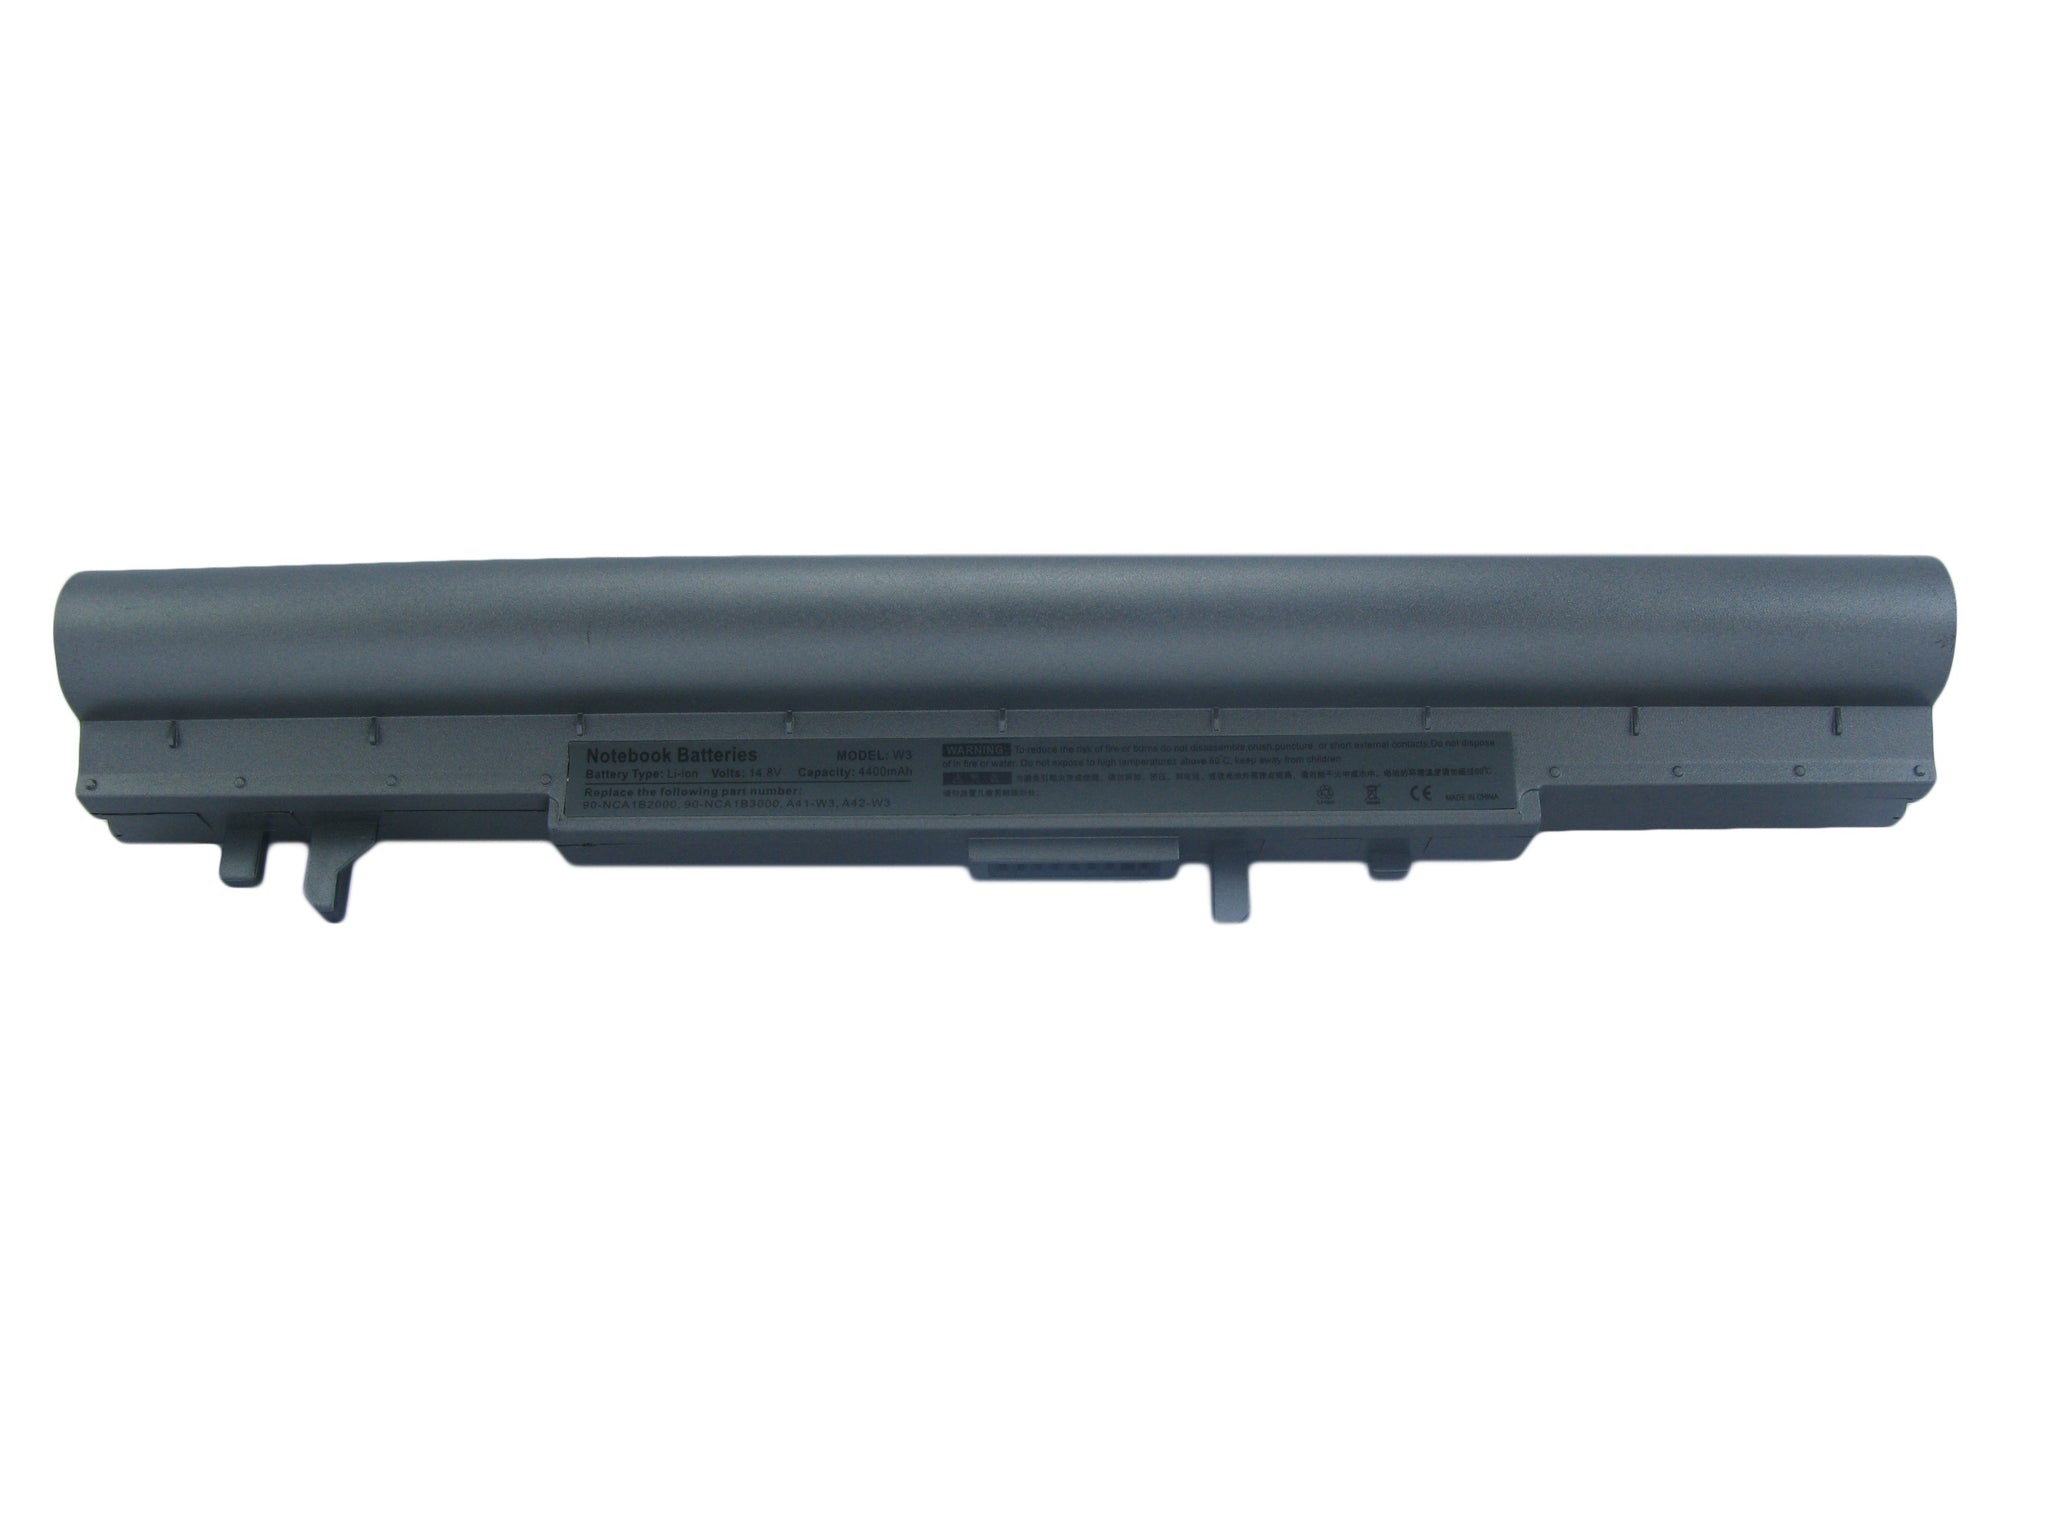 Asus A42-W3 Laptop Battery - eBuy UAE